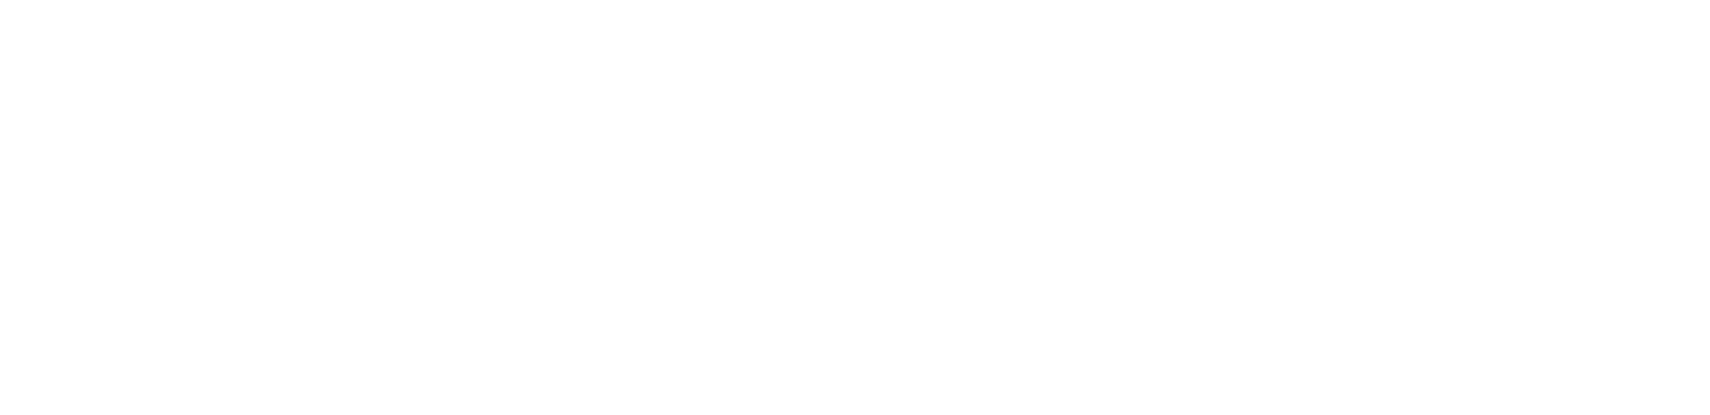 KTA Annual Symposium Logo